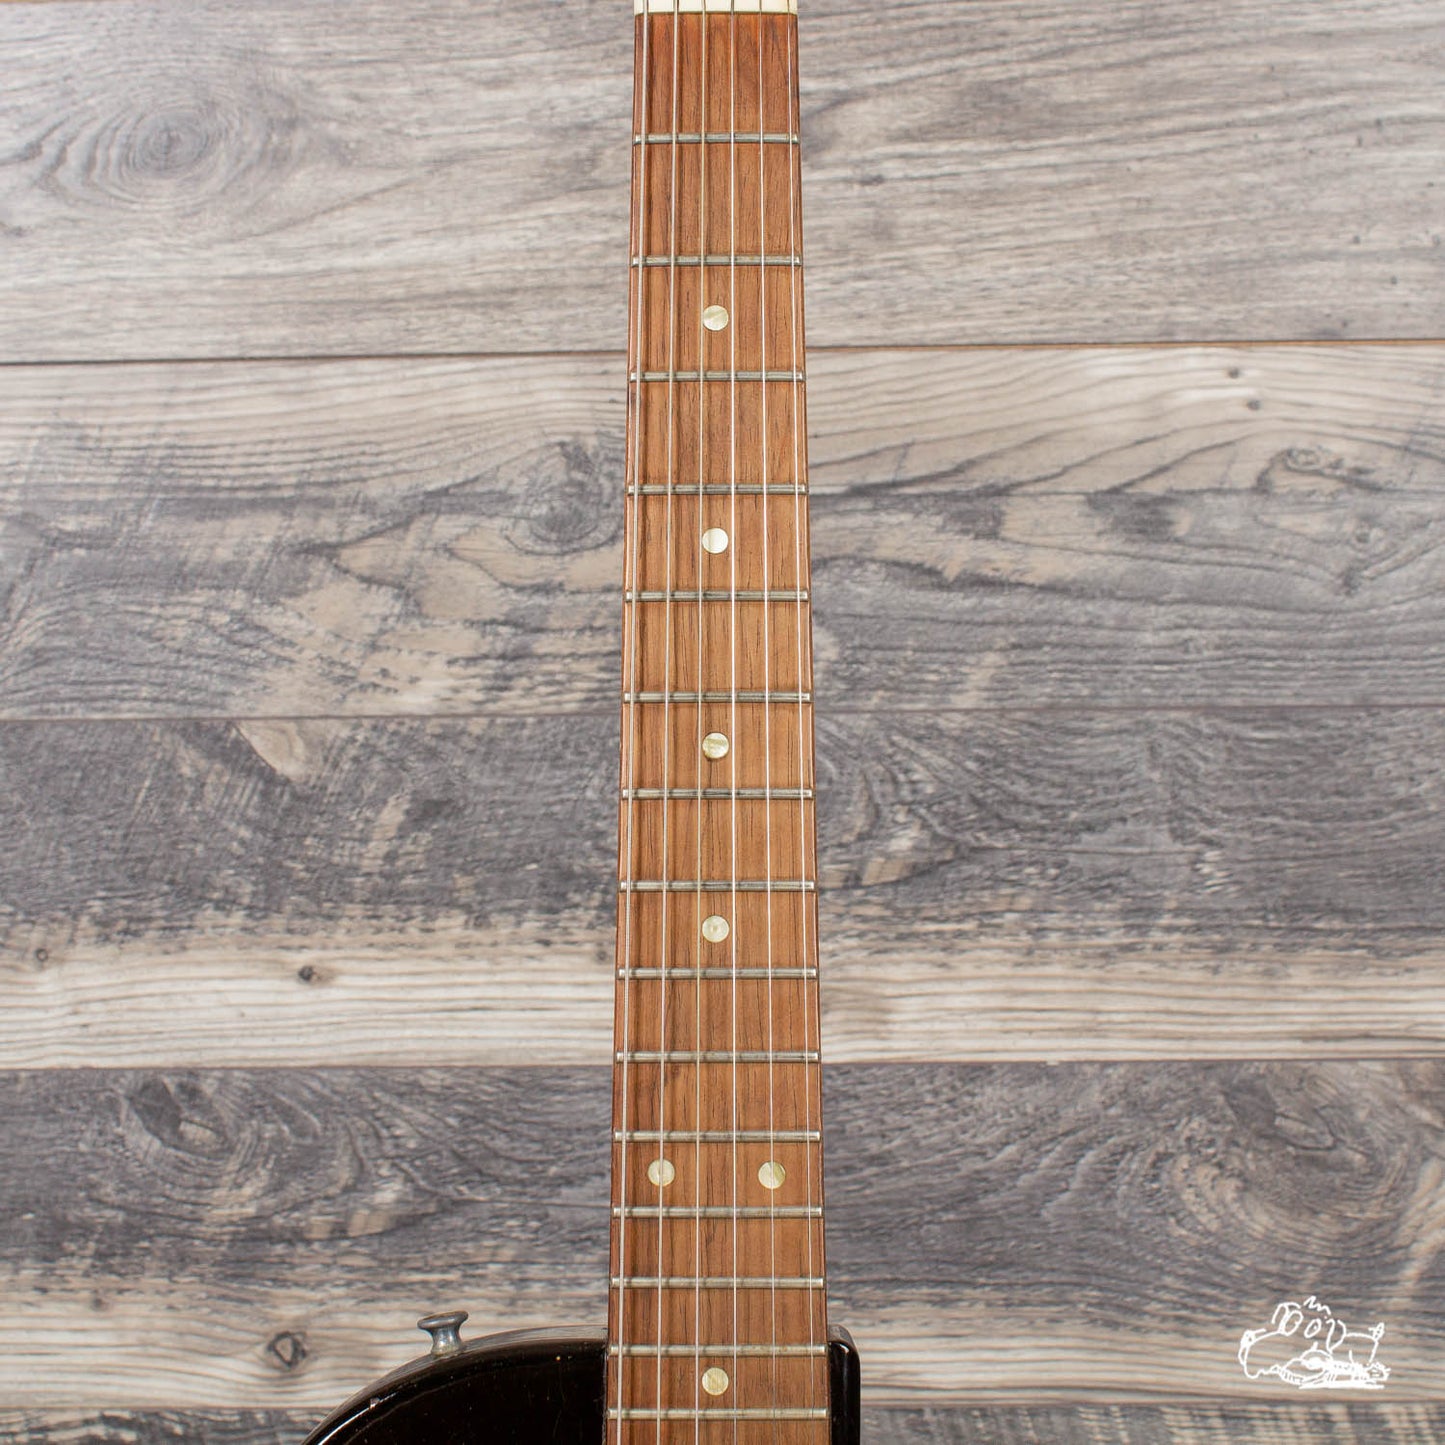 1957 Gibson Les Paul Junior - 3/4 Scale Model